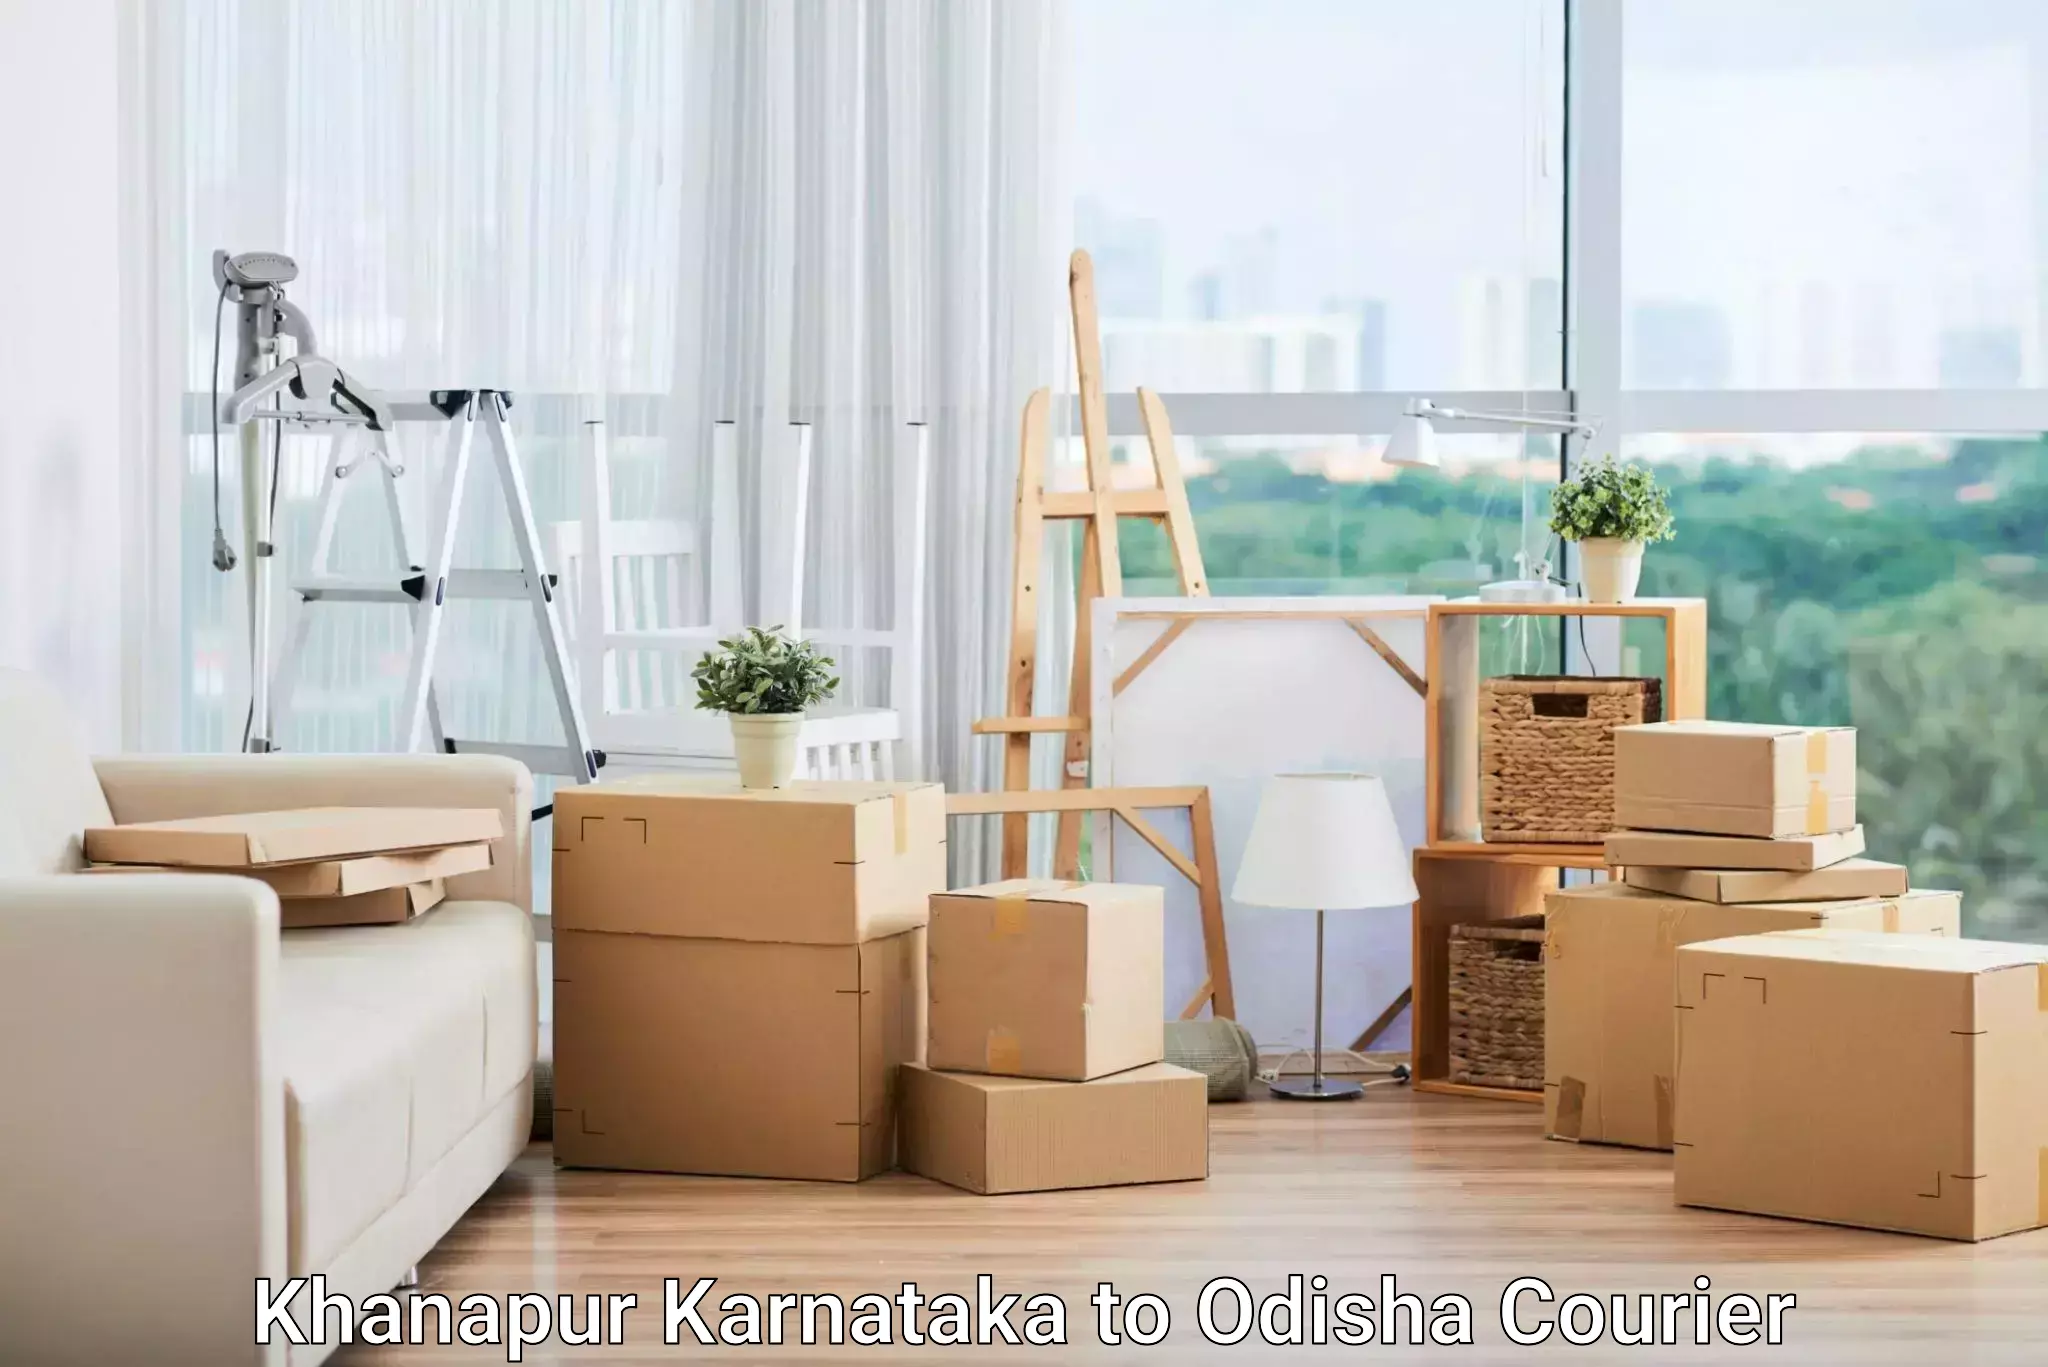 Same-day delivery solutions Khanapur Karnataka to Ganjam